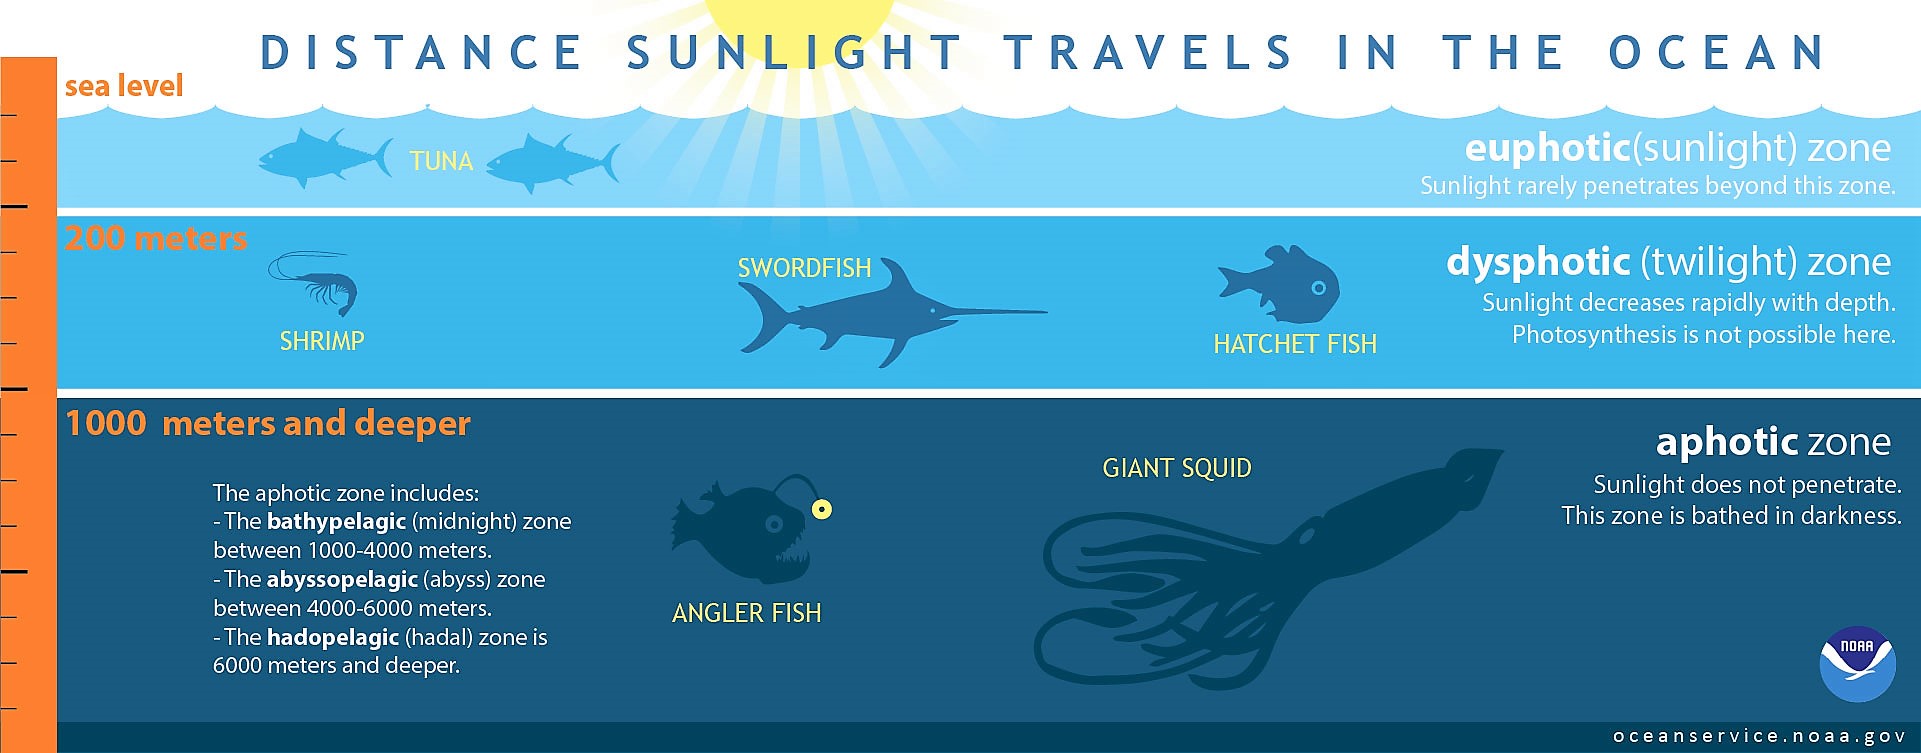 How far does light travel in the ocean?